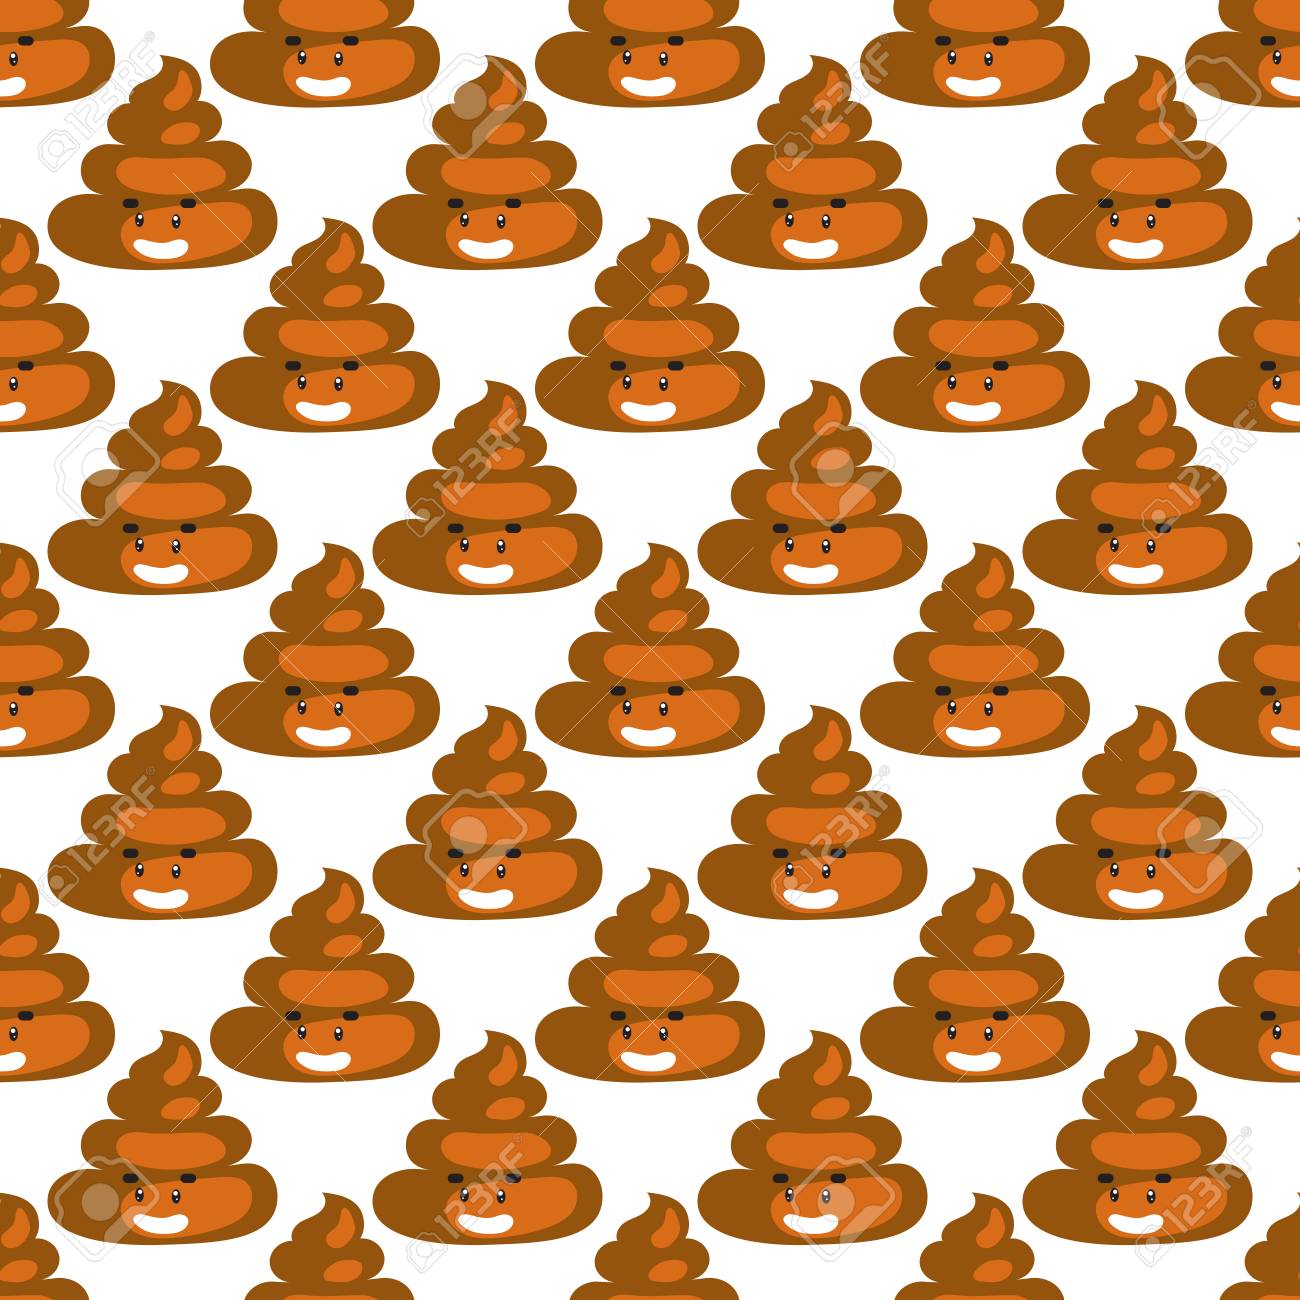 Poo Emoji Pattern Poop Fun Seamless Background Royalty